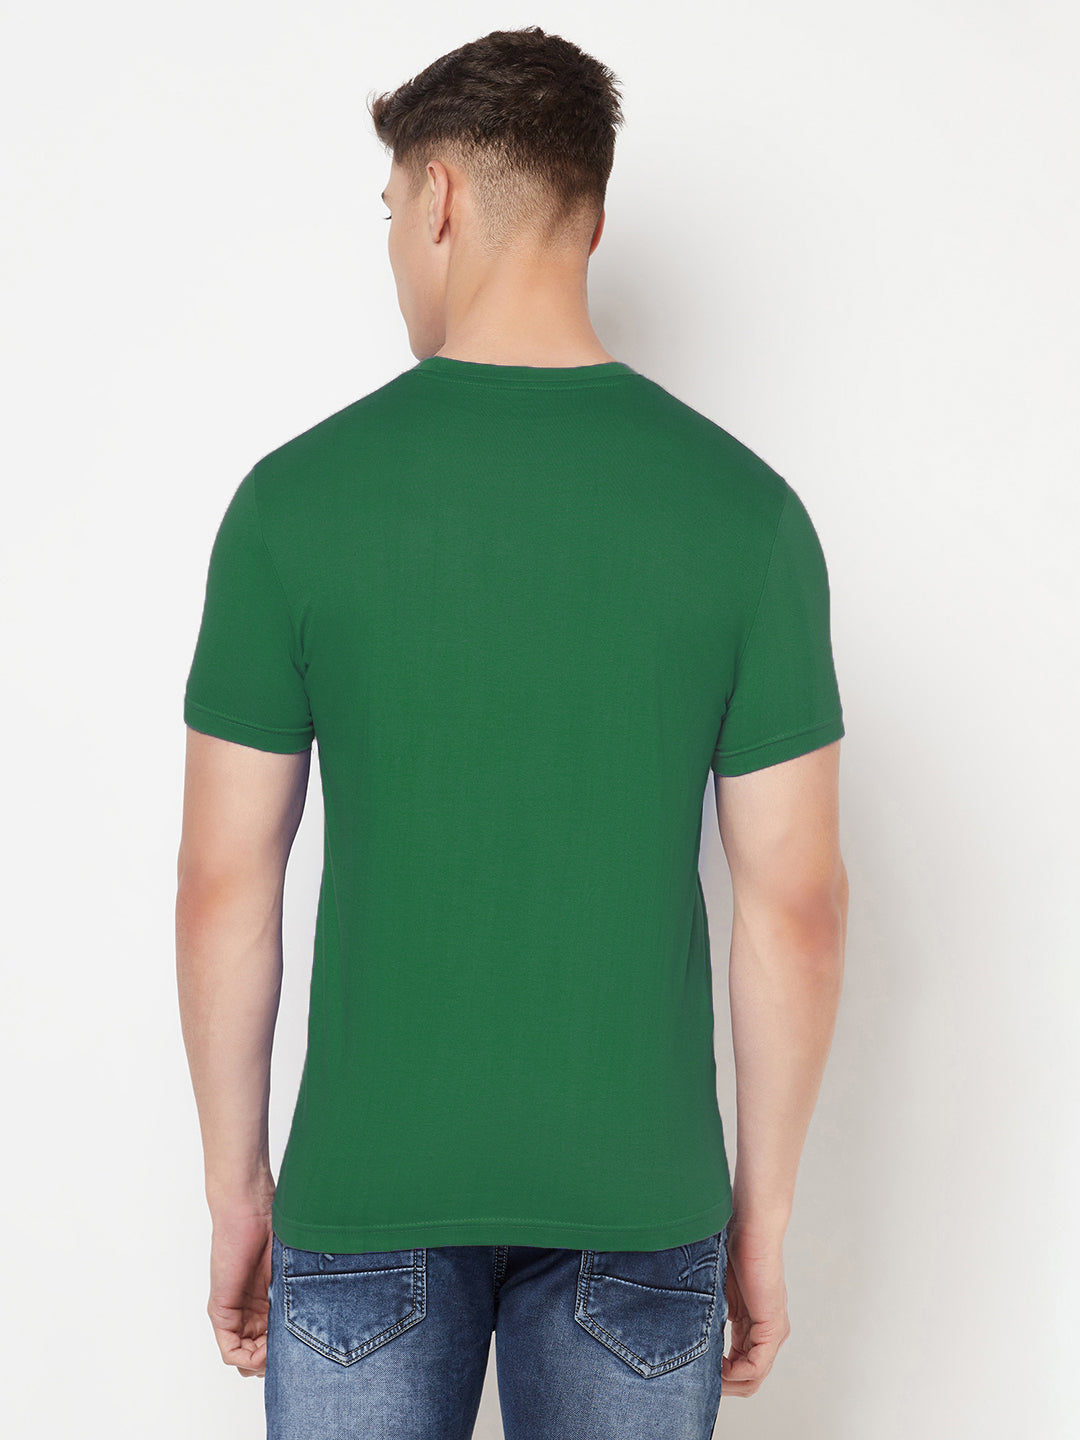 Premium Cotton Tshirts  (Pack of 2- Maroon,Green)